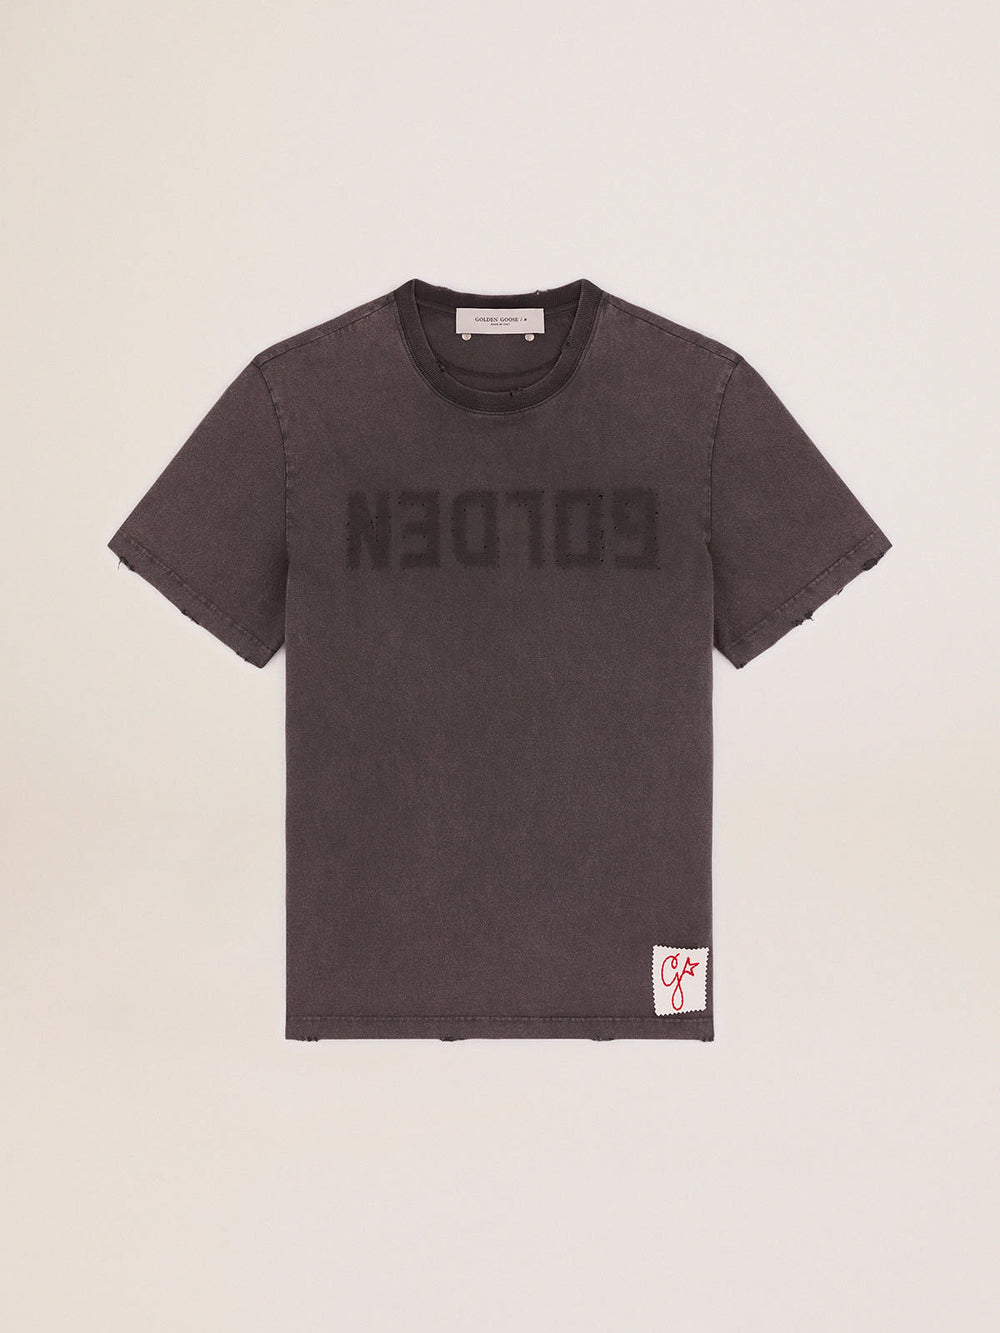 Regular T Shirt Distressed Cotton Jersey Anthracite Gray